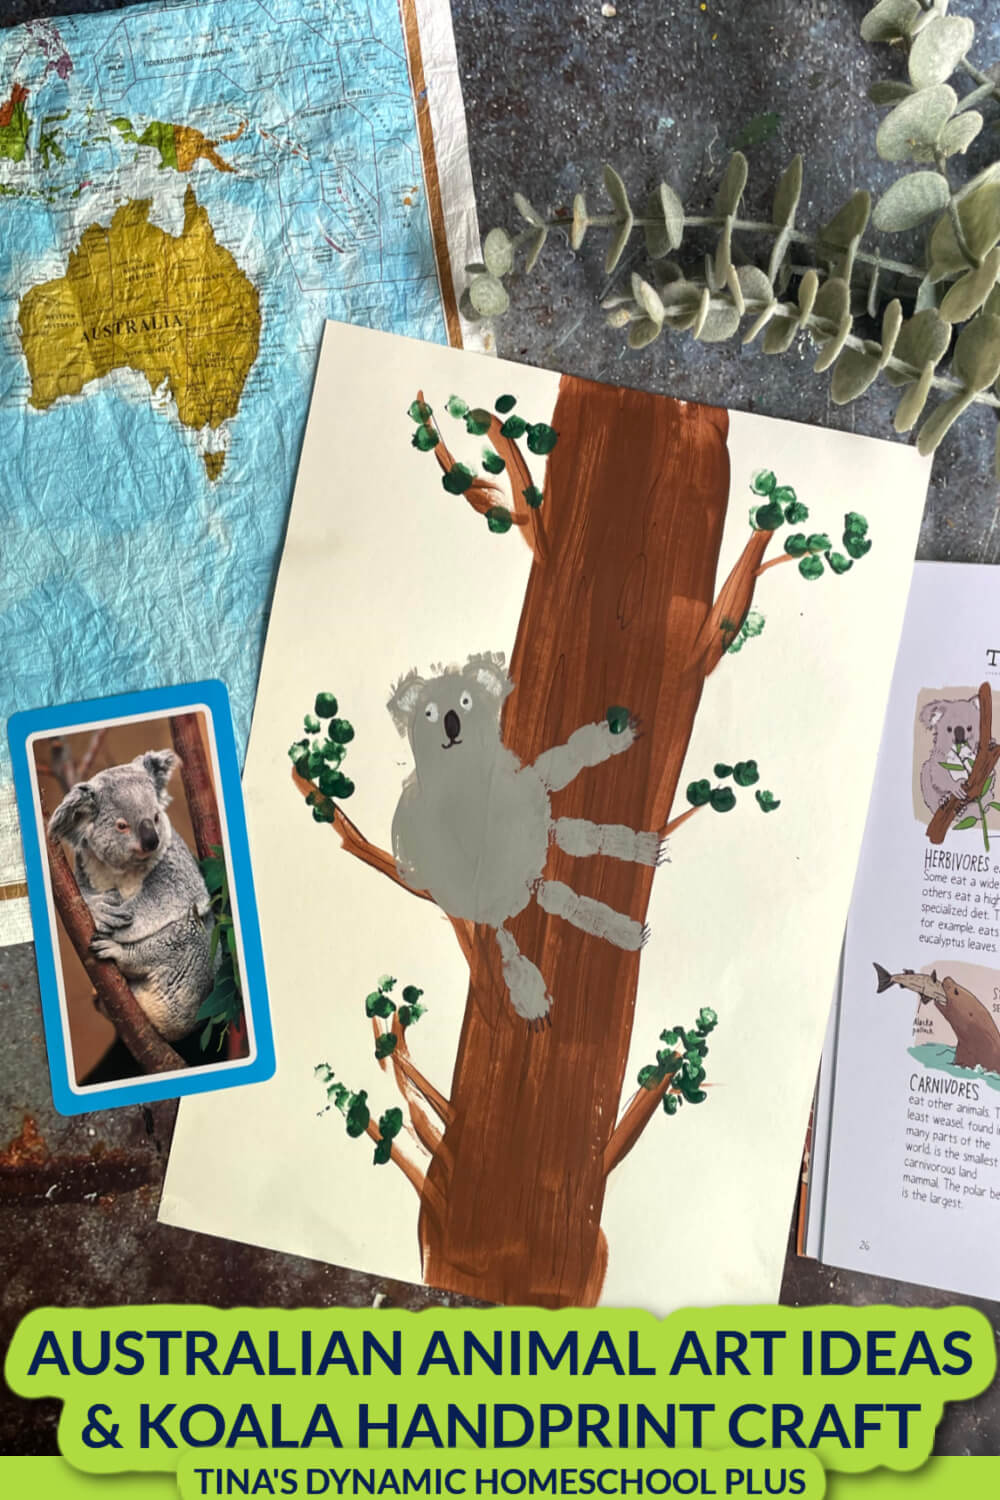 Interactive READ ALOUD ACTIVITIES and CRAFT The Koala Who Could  (Kindergarten)